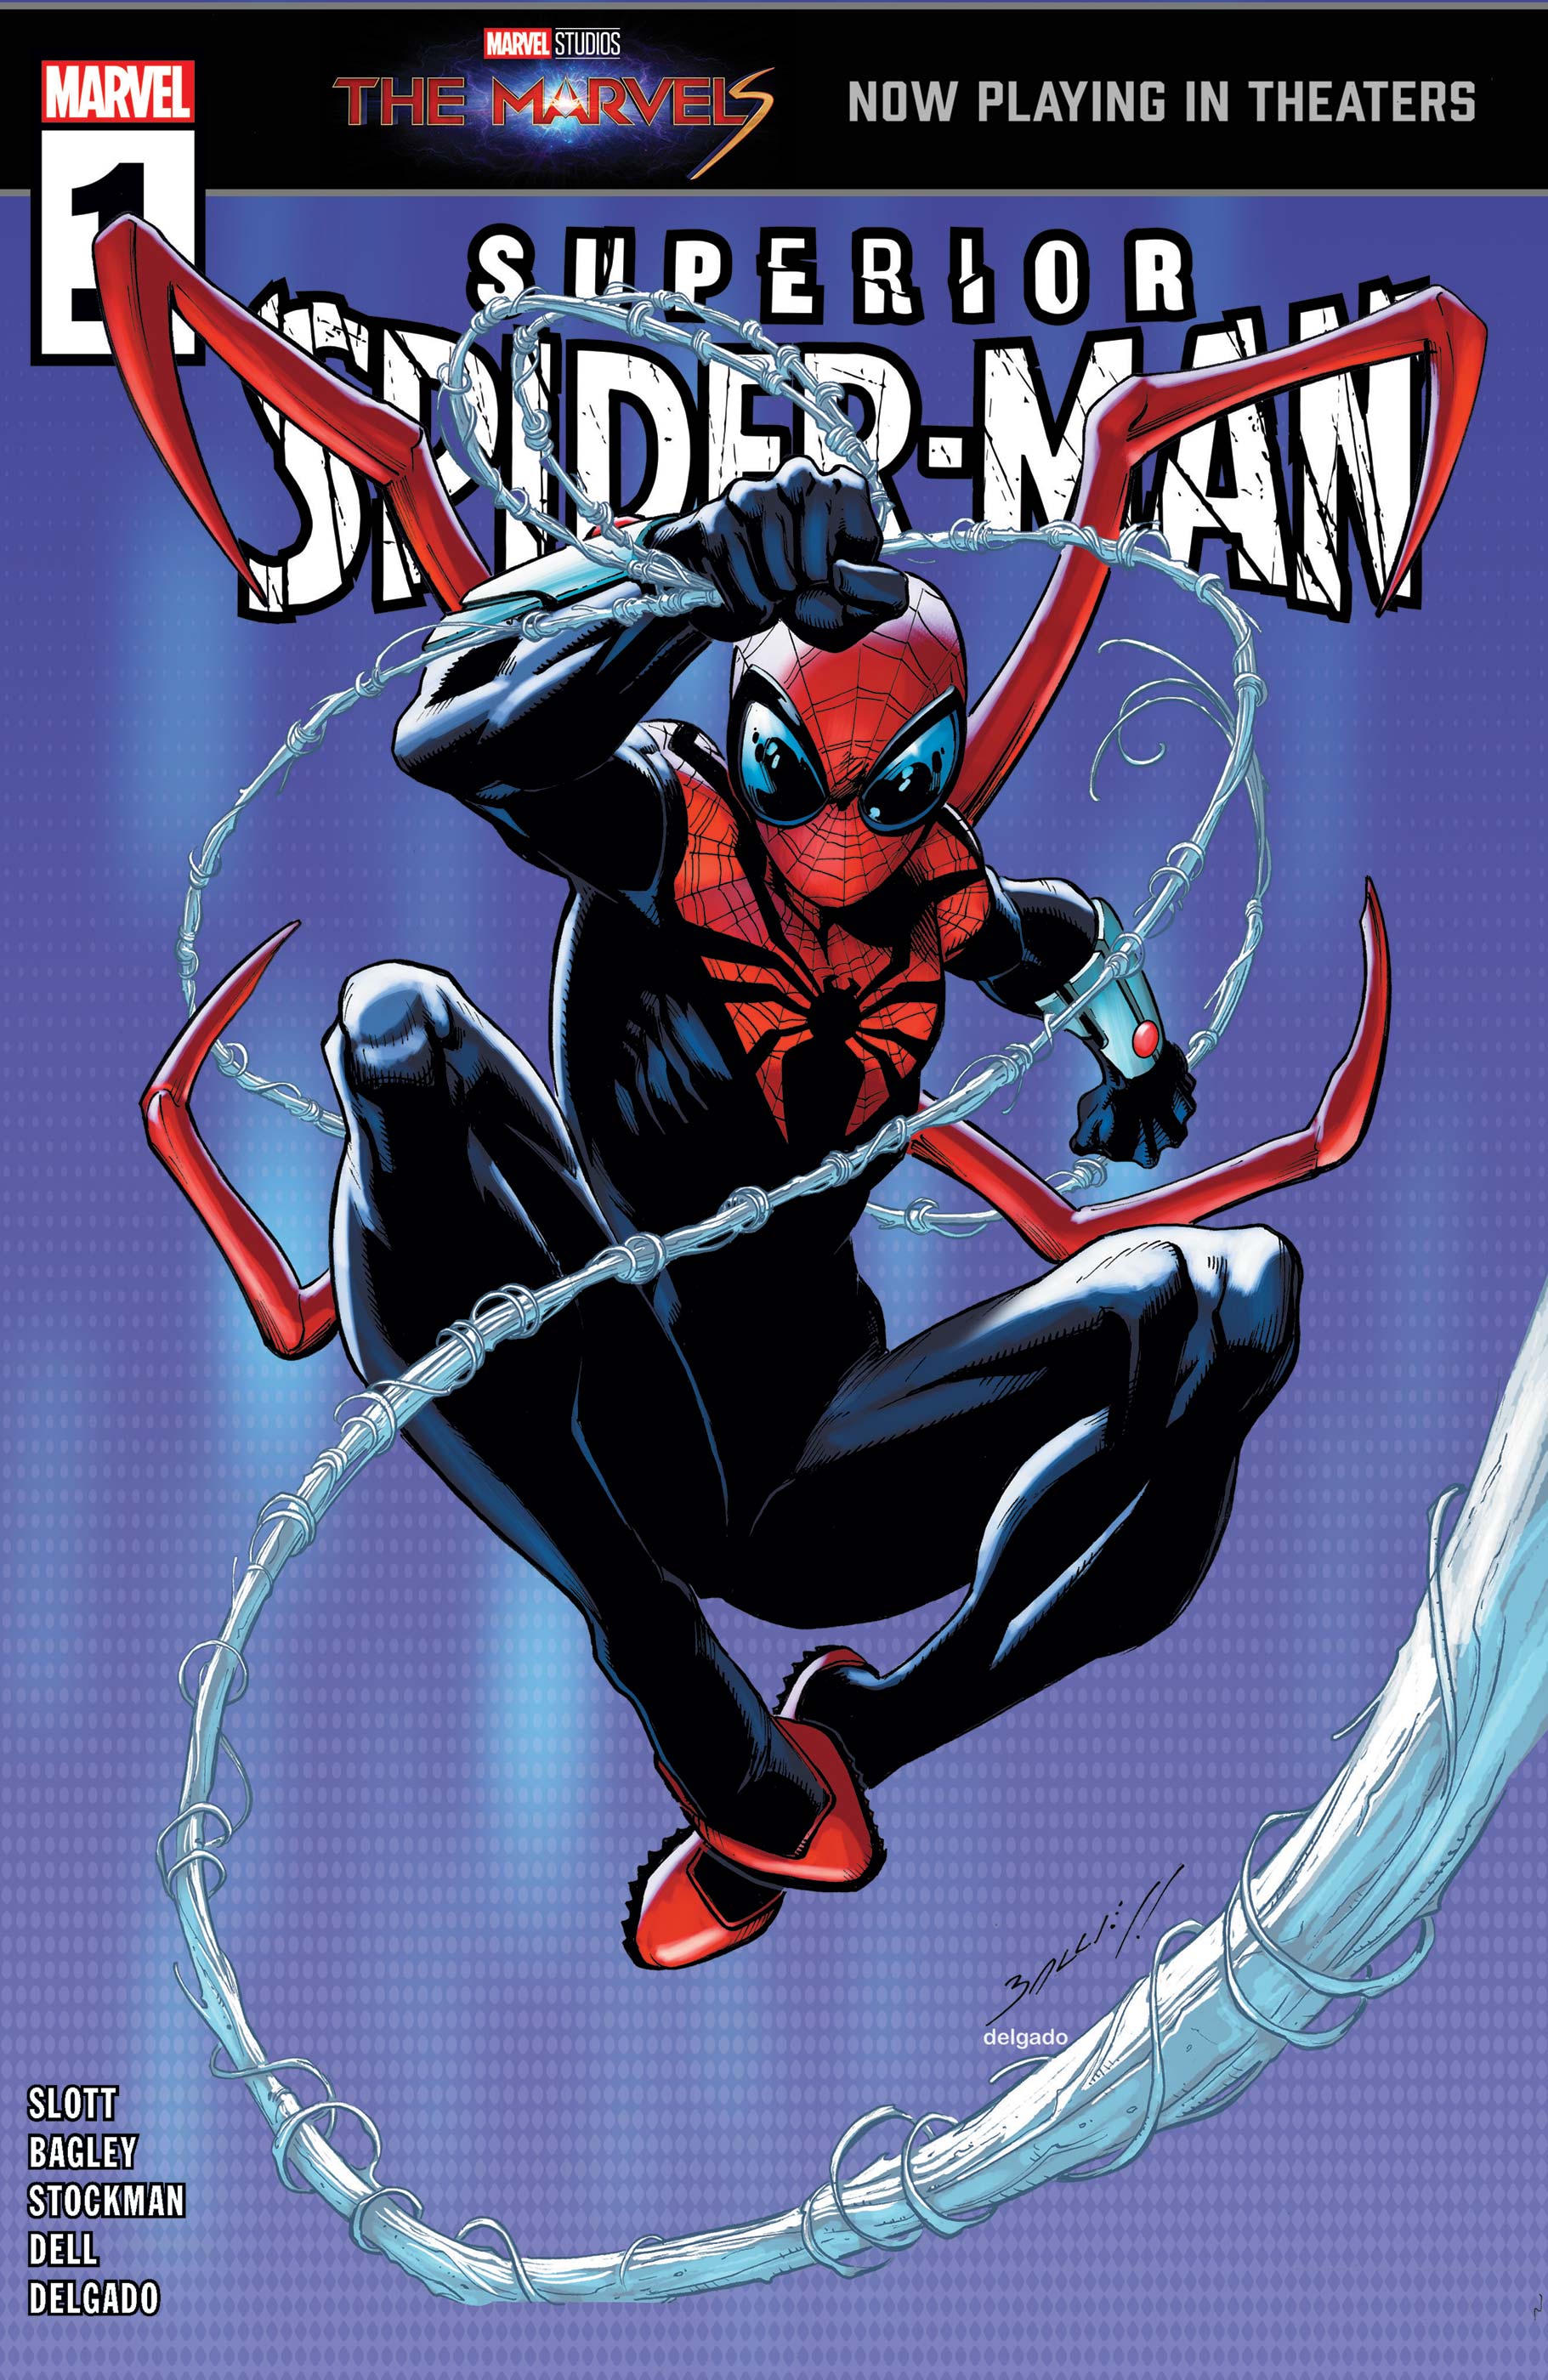 Superior spider-man returns